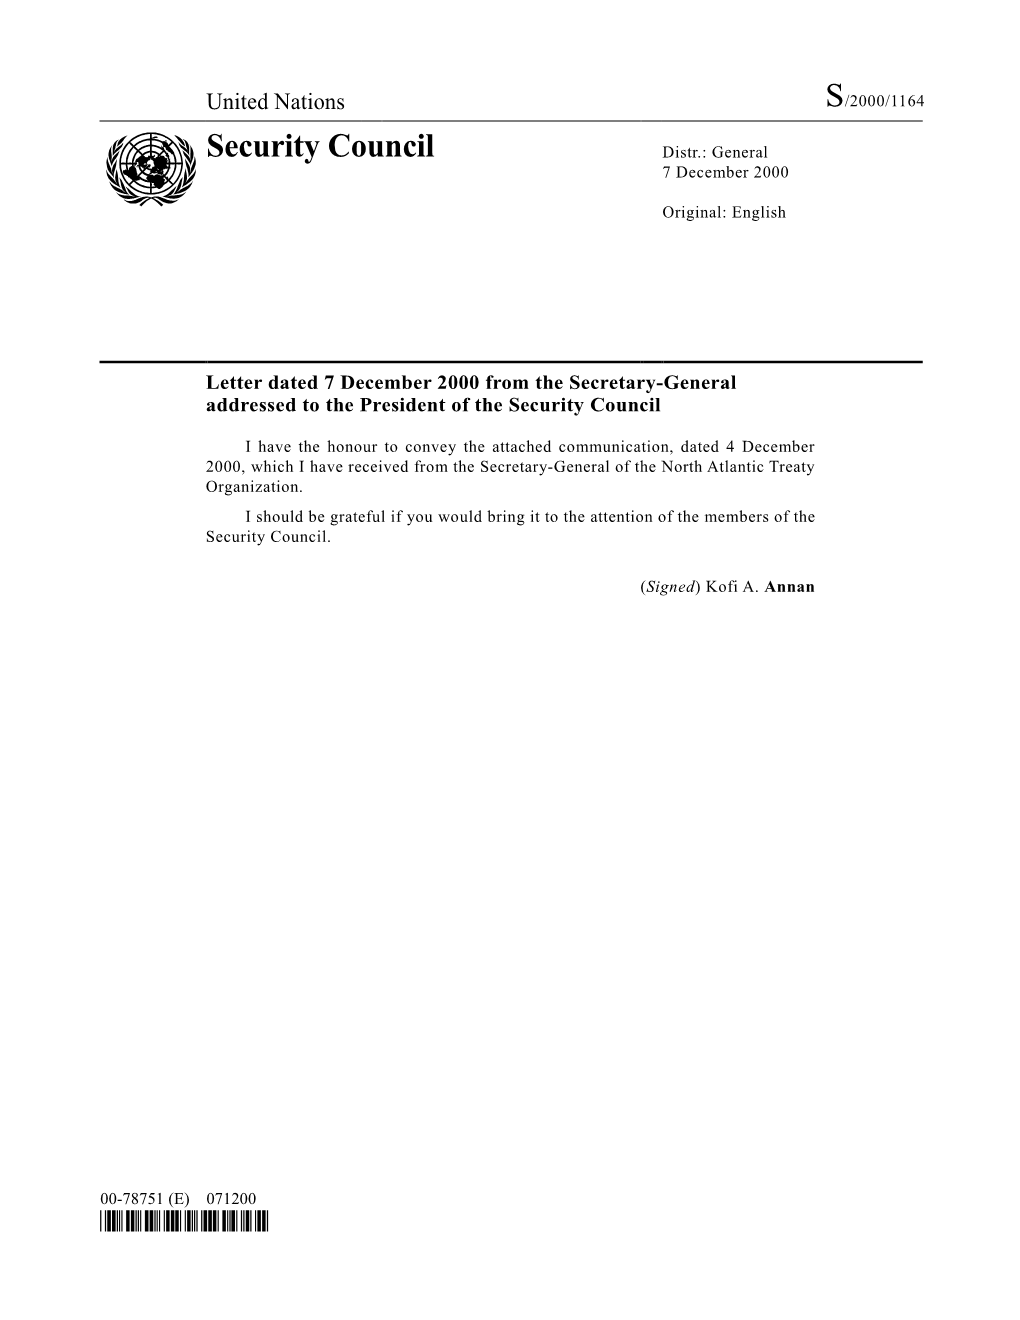 Security Council Distr.: General 7 December 2000